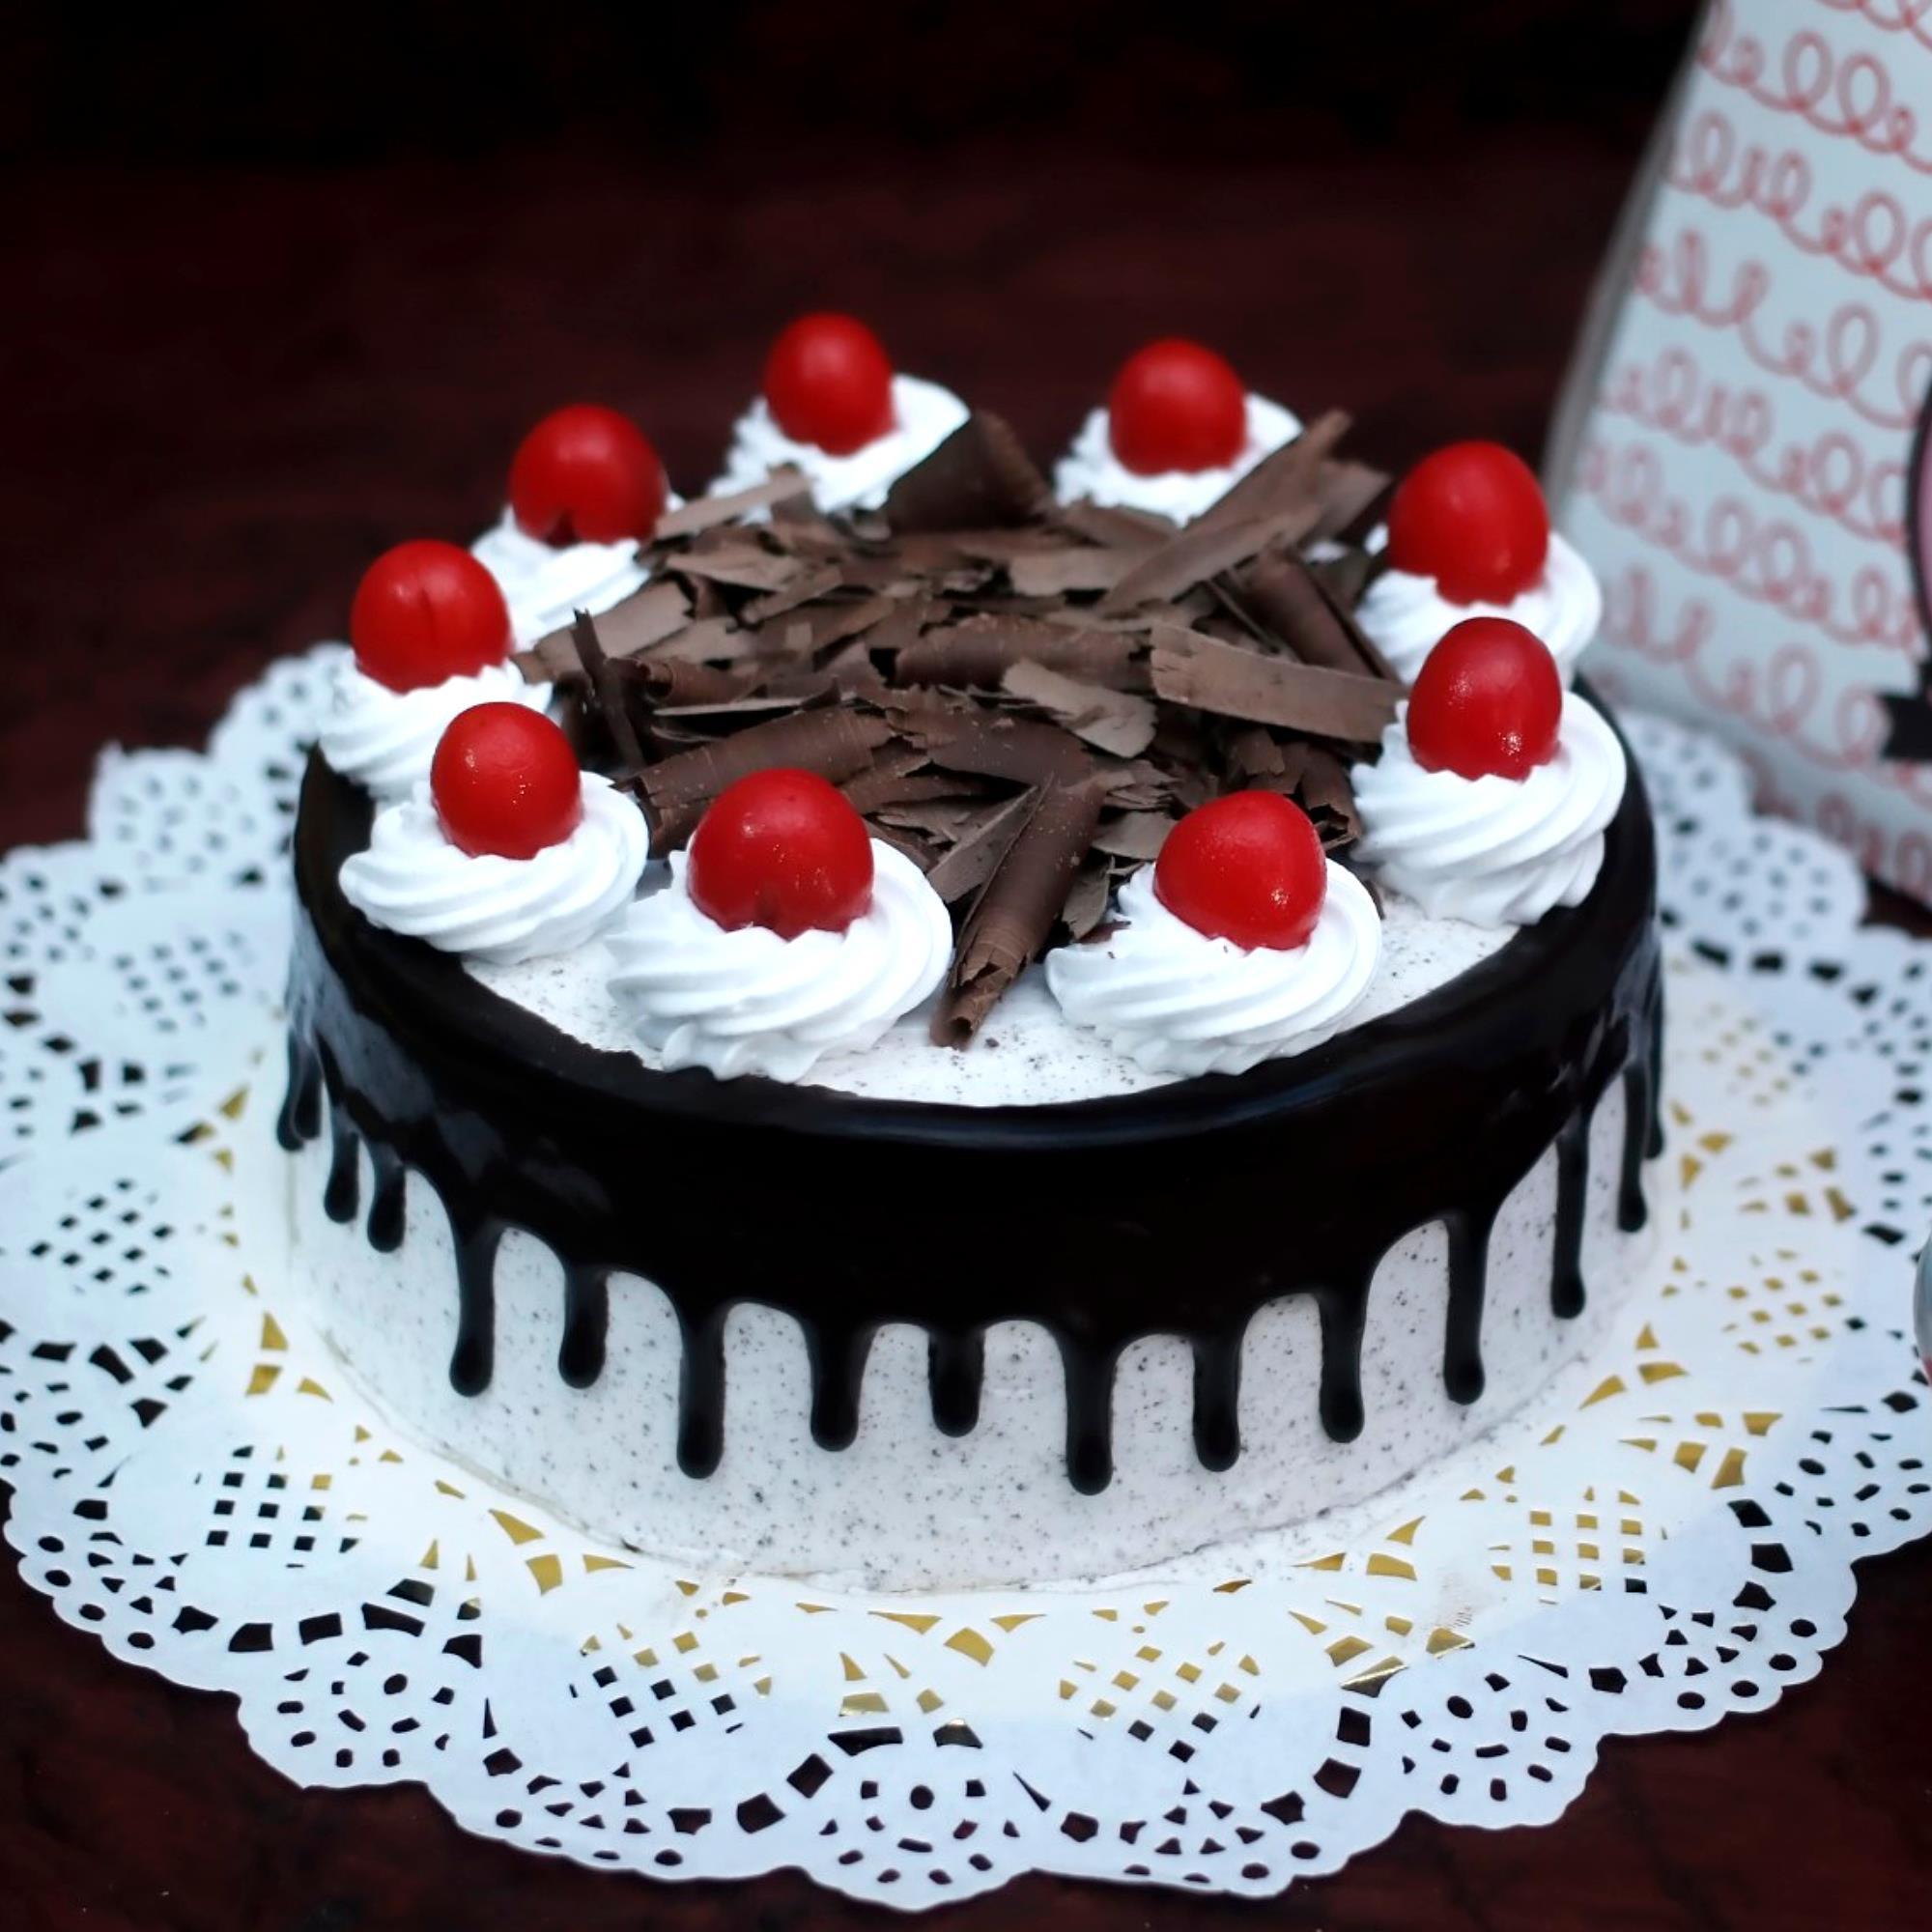 Black Forest Cake {A Classic Tasty Chocolate Cherry Cake}